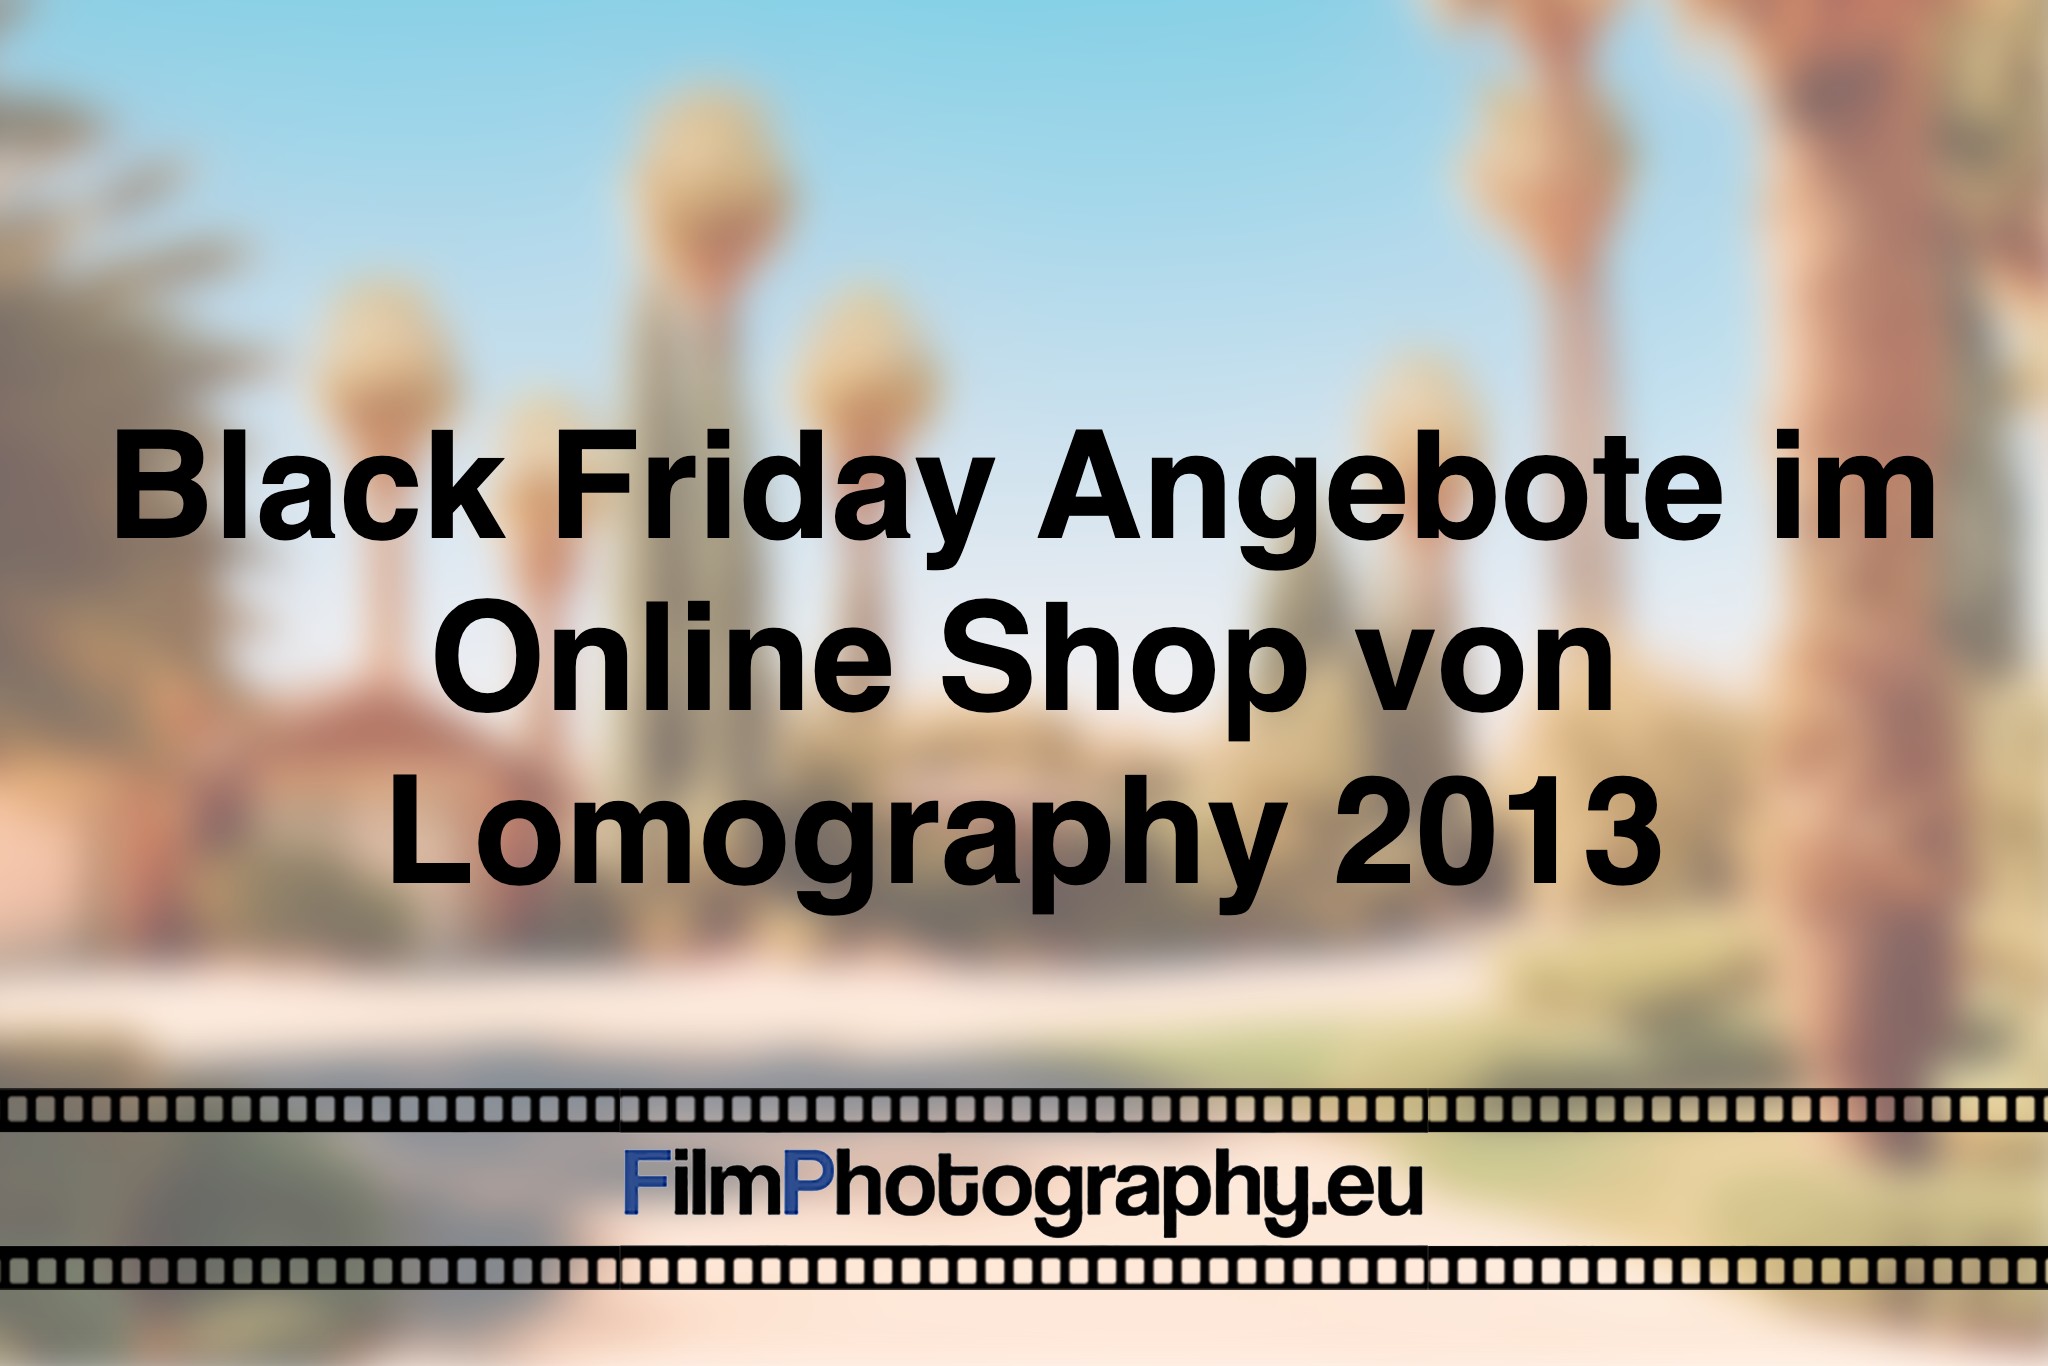 black-friday-angebote-im-online-shop-von-lomography-2013-photo-bnv